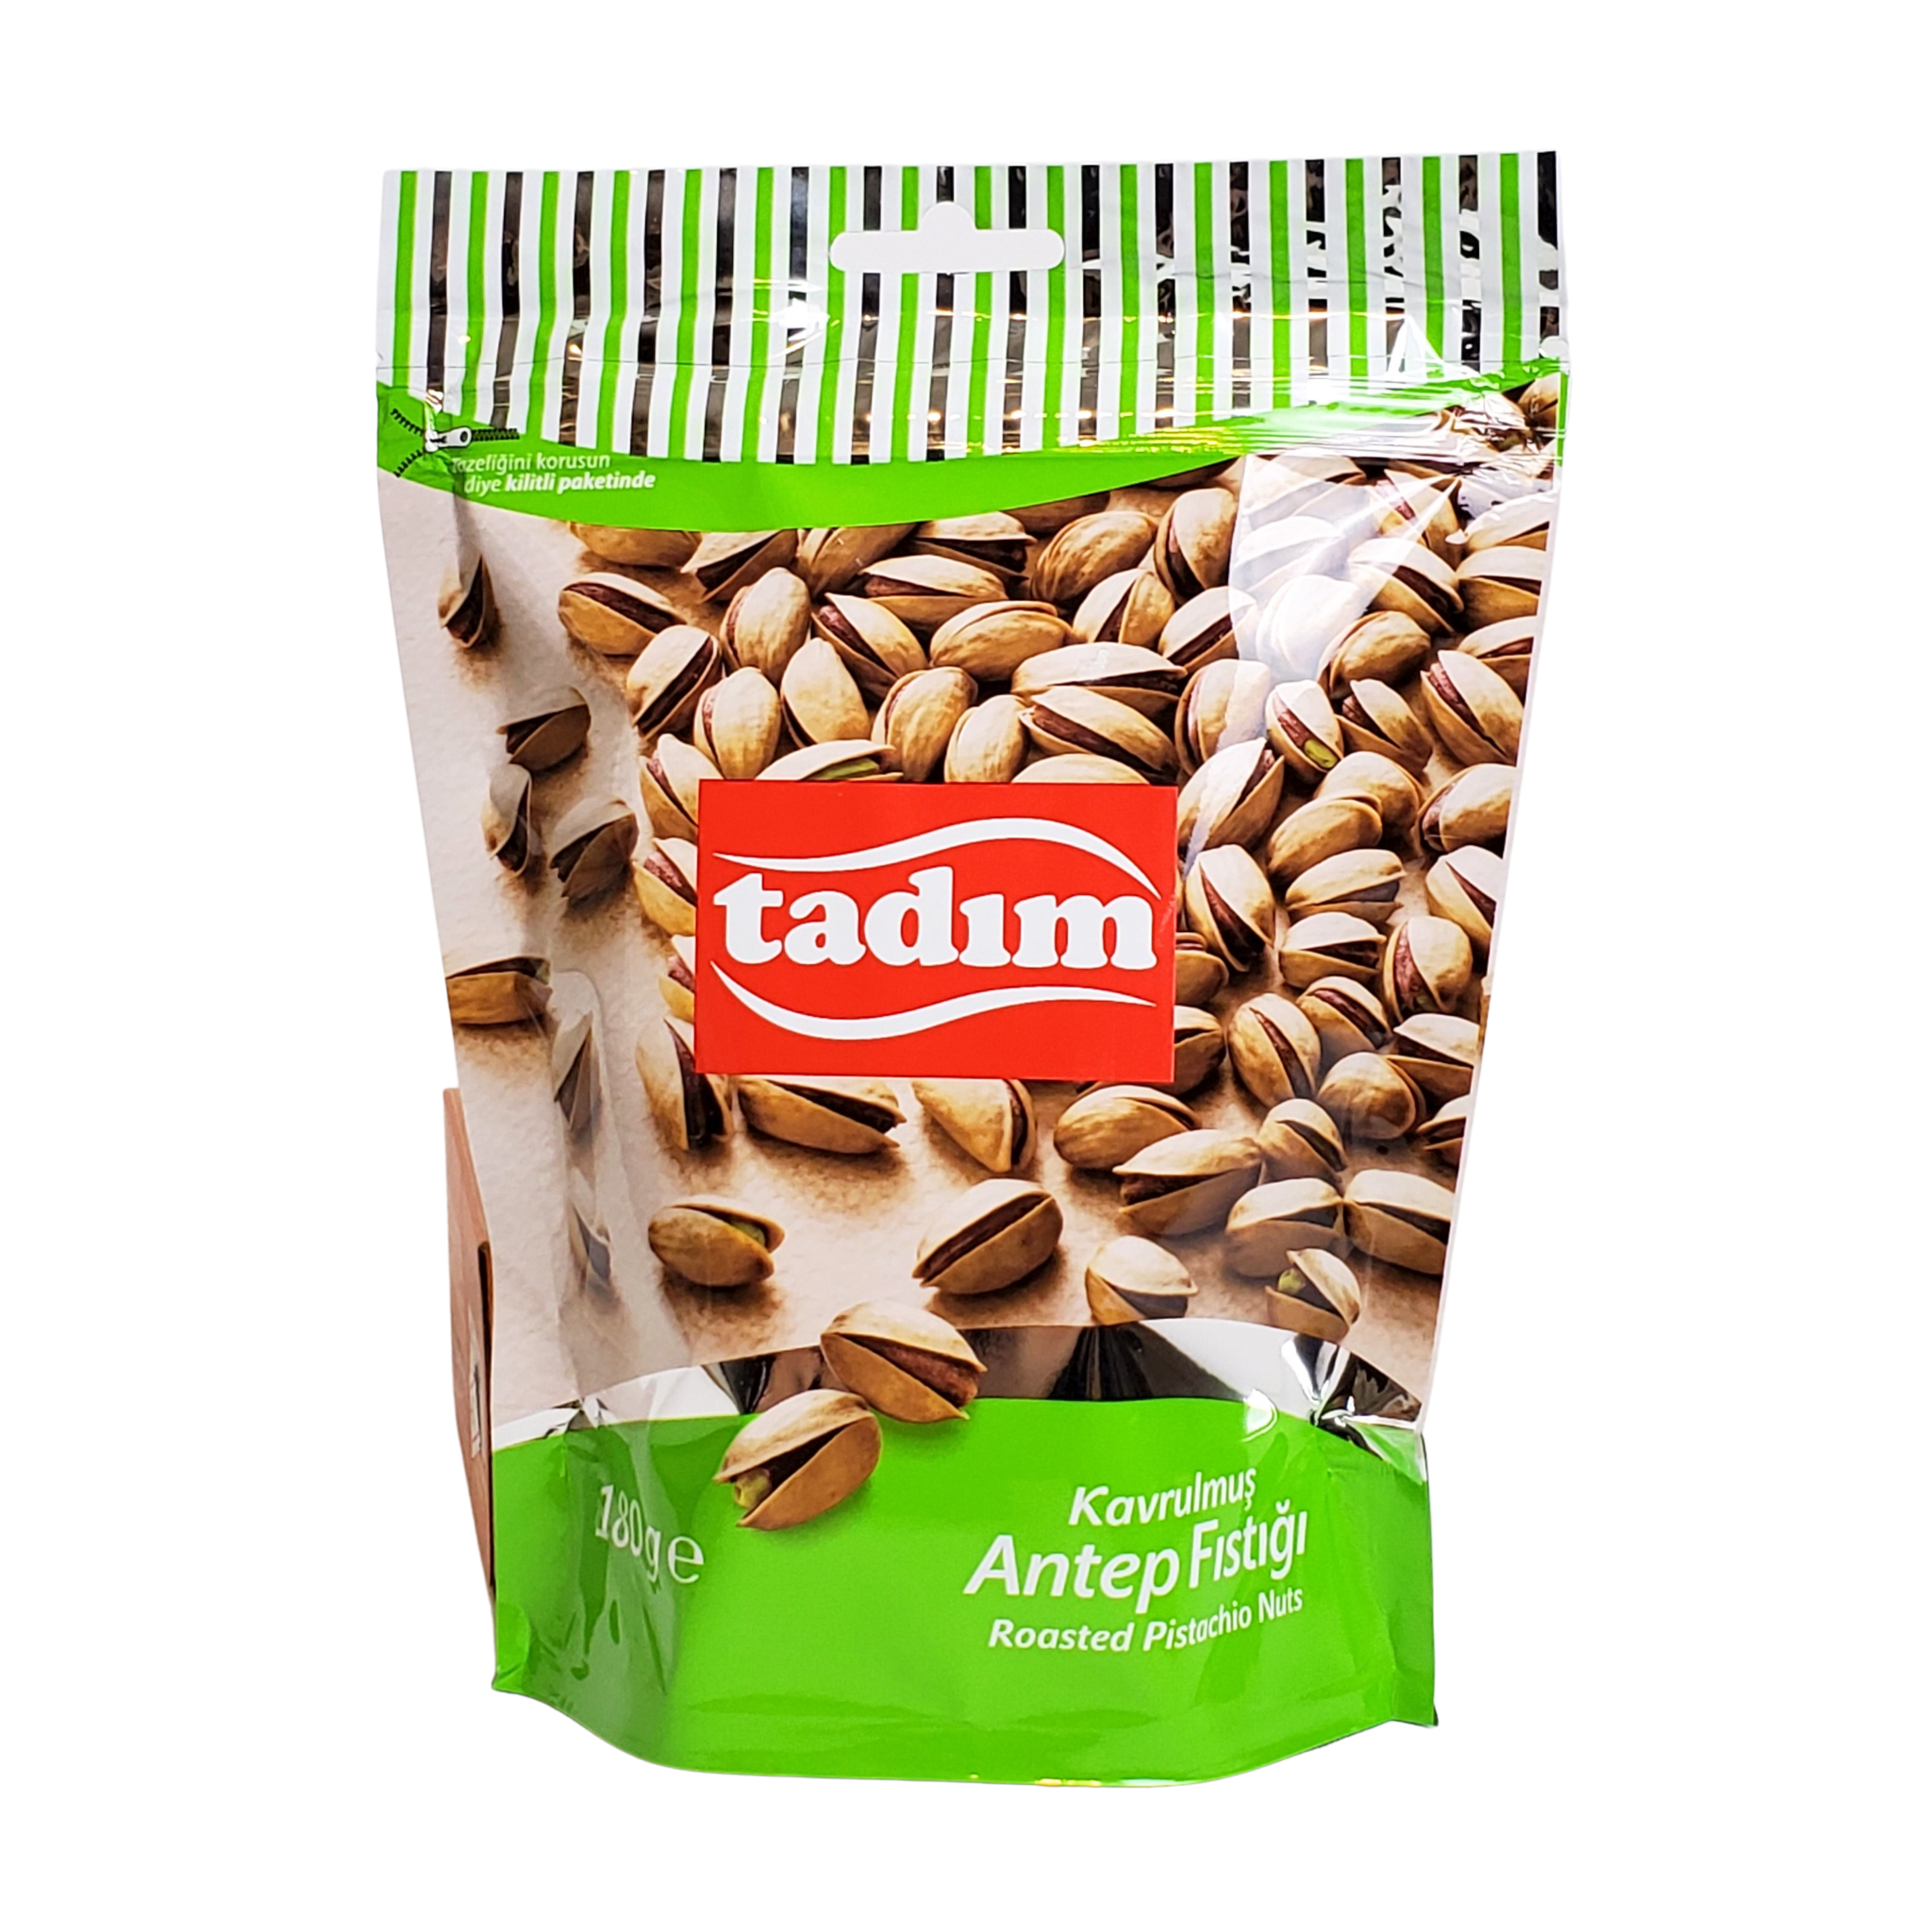 Tadim Roasted Pistachio Nuts